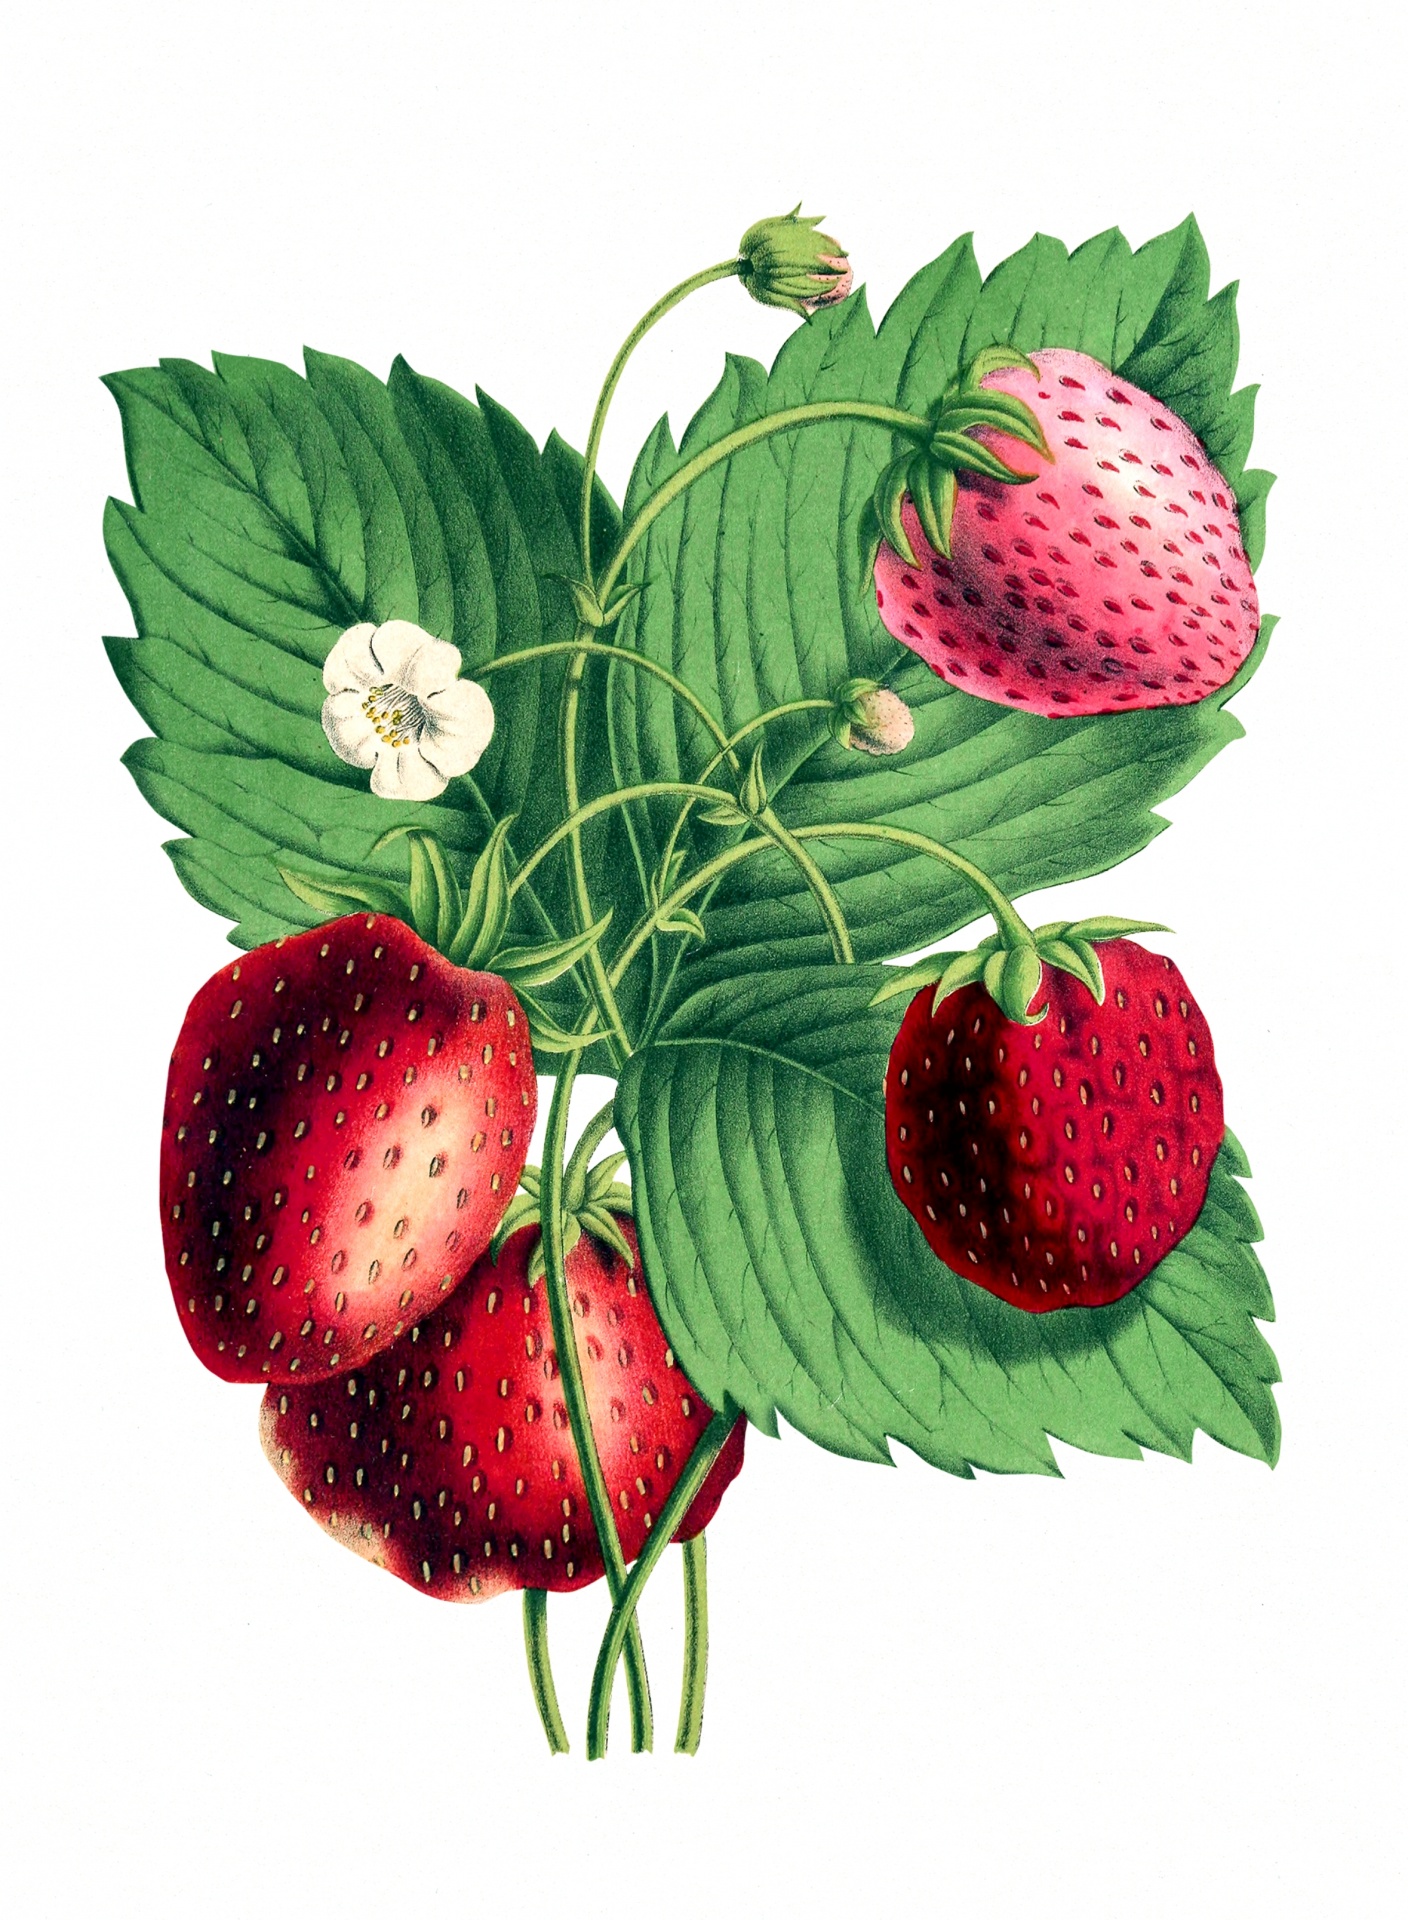 Strawberries Fruit Vintage Art Illustration Hand Painted